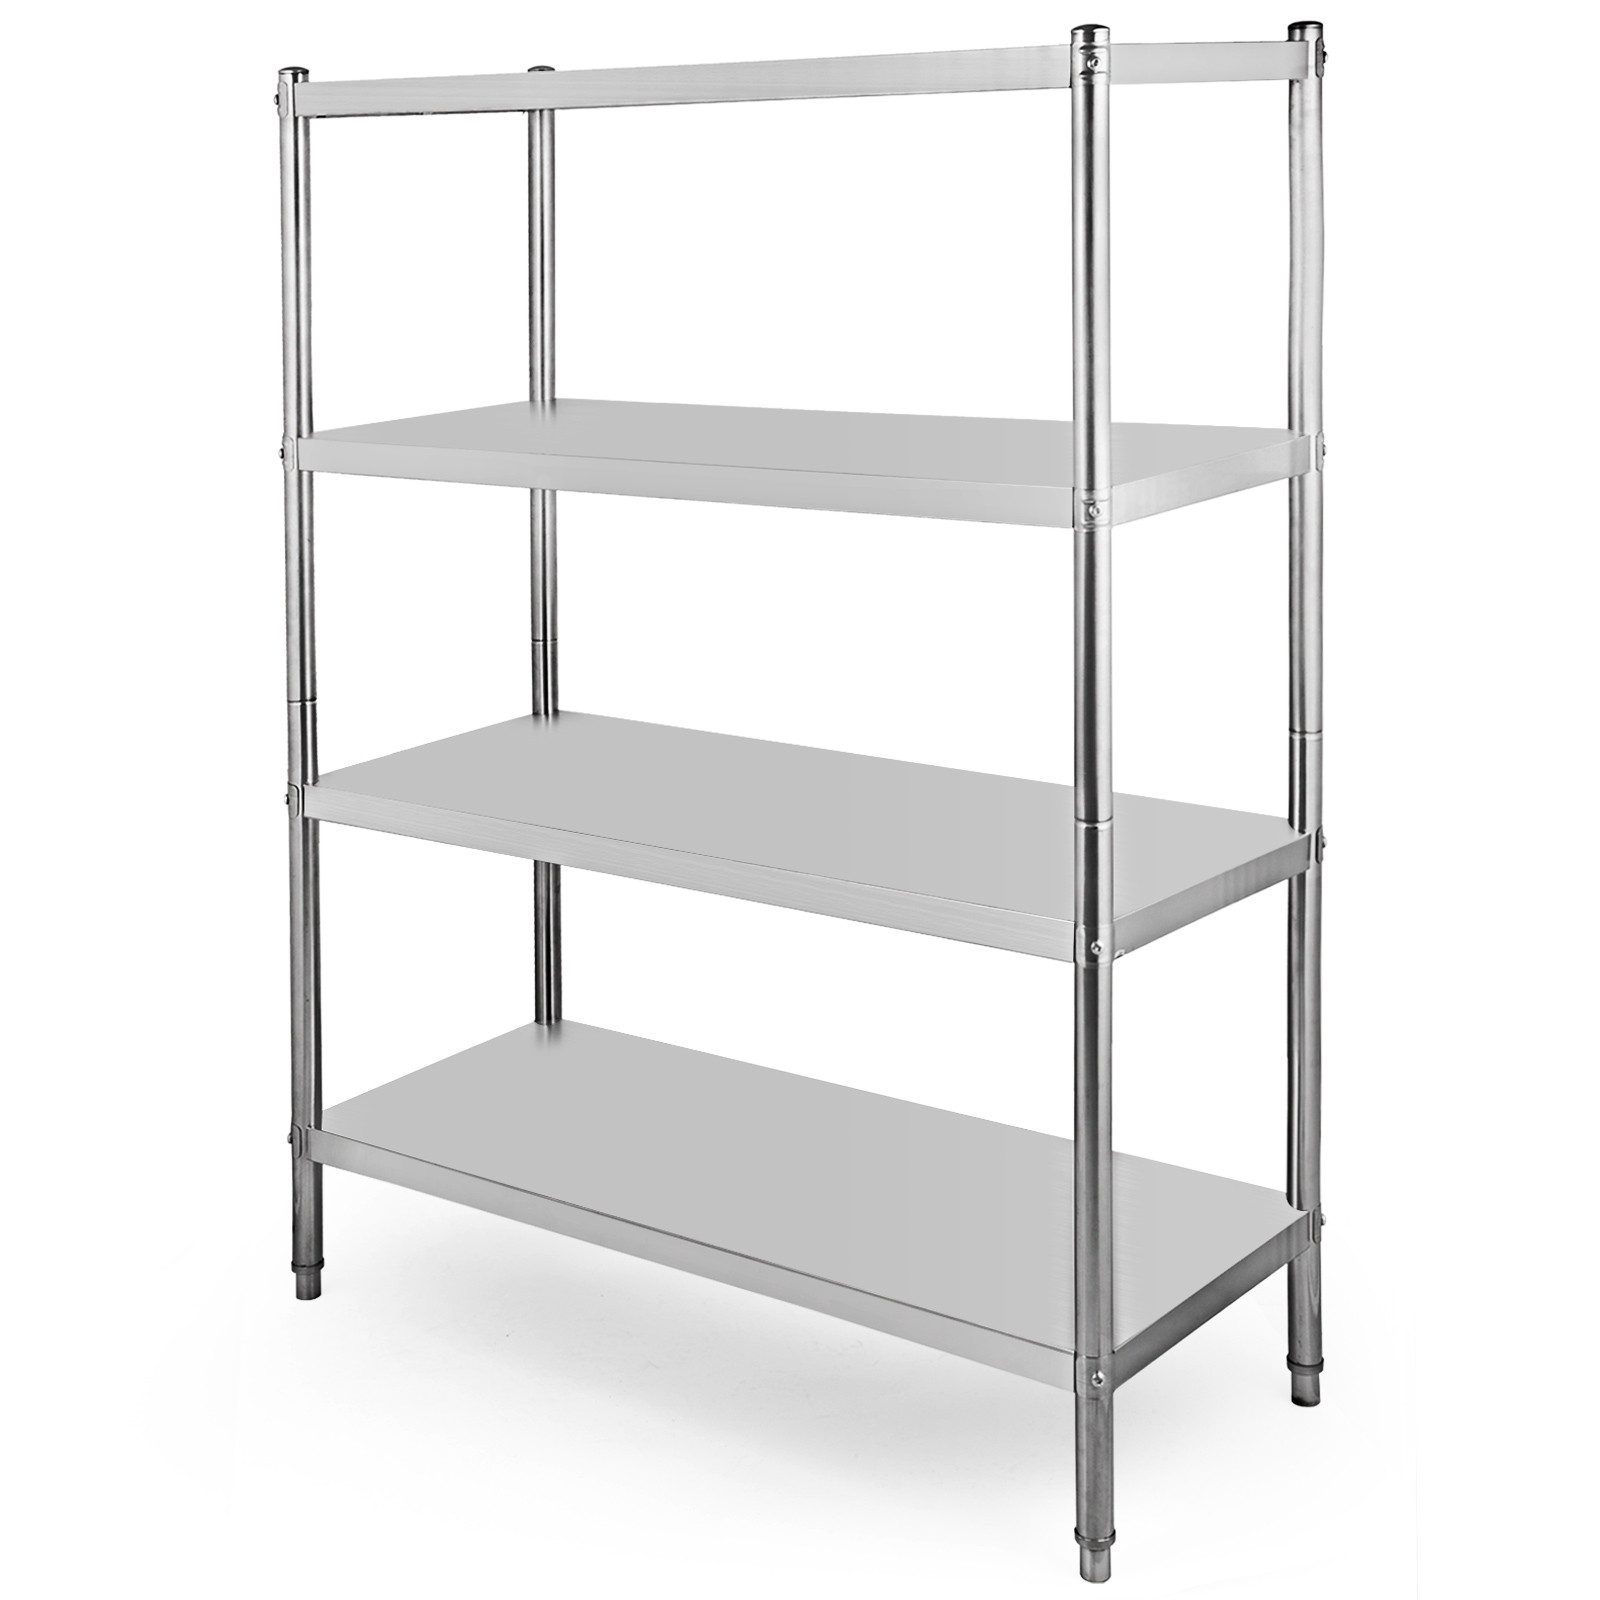 Kitchen Shelves Shelf Rack Stainless Steel Shelving and Organizer Units 4/5 Tier | eBay